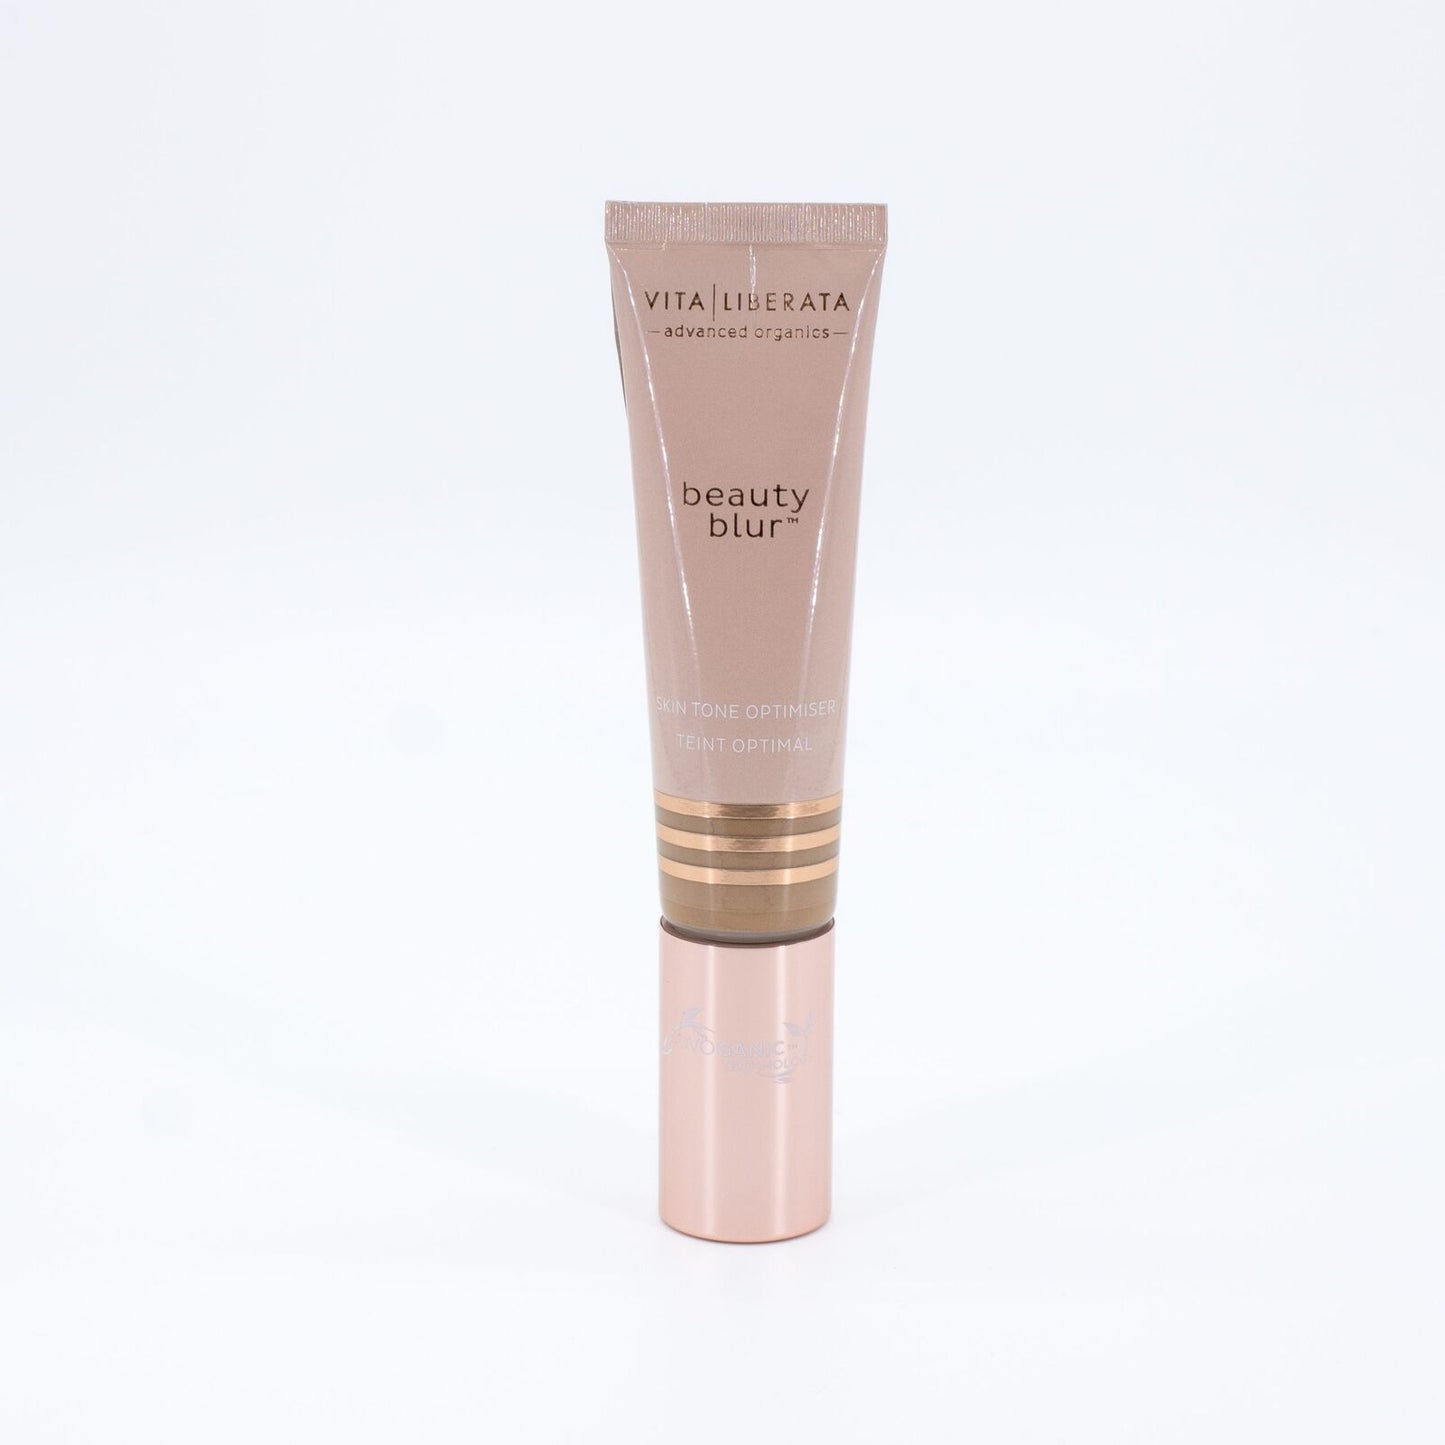 VITA LIBERATA Beauty Blur Skin Tone Optimiser LATTE DARK 1.01oz - Imperfect Box